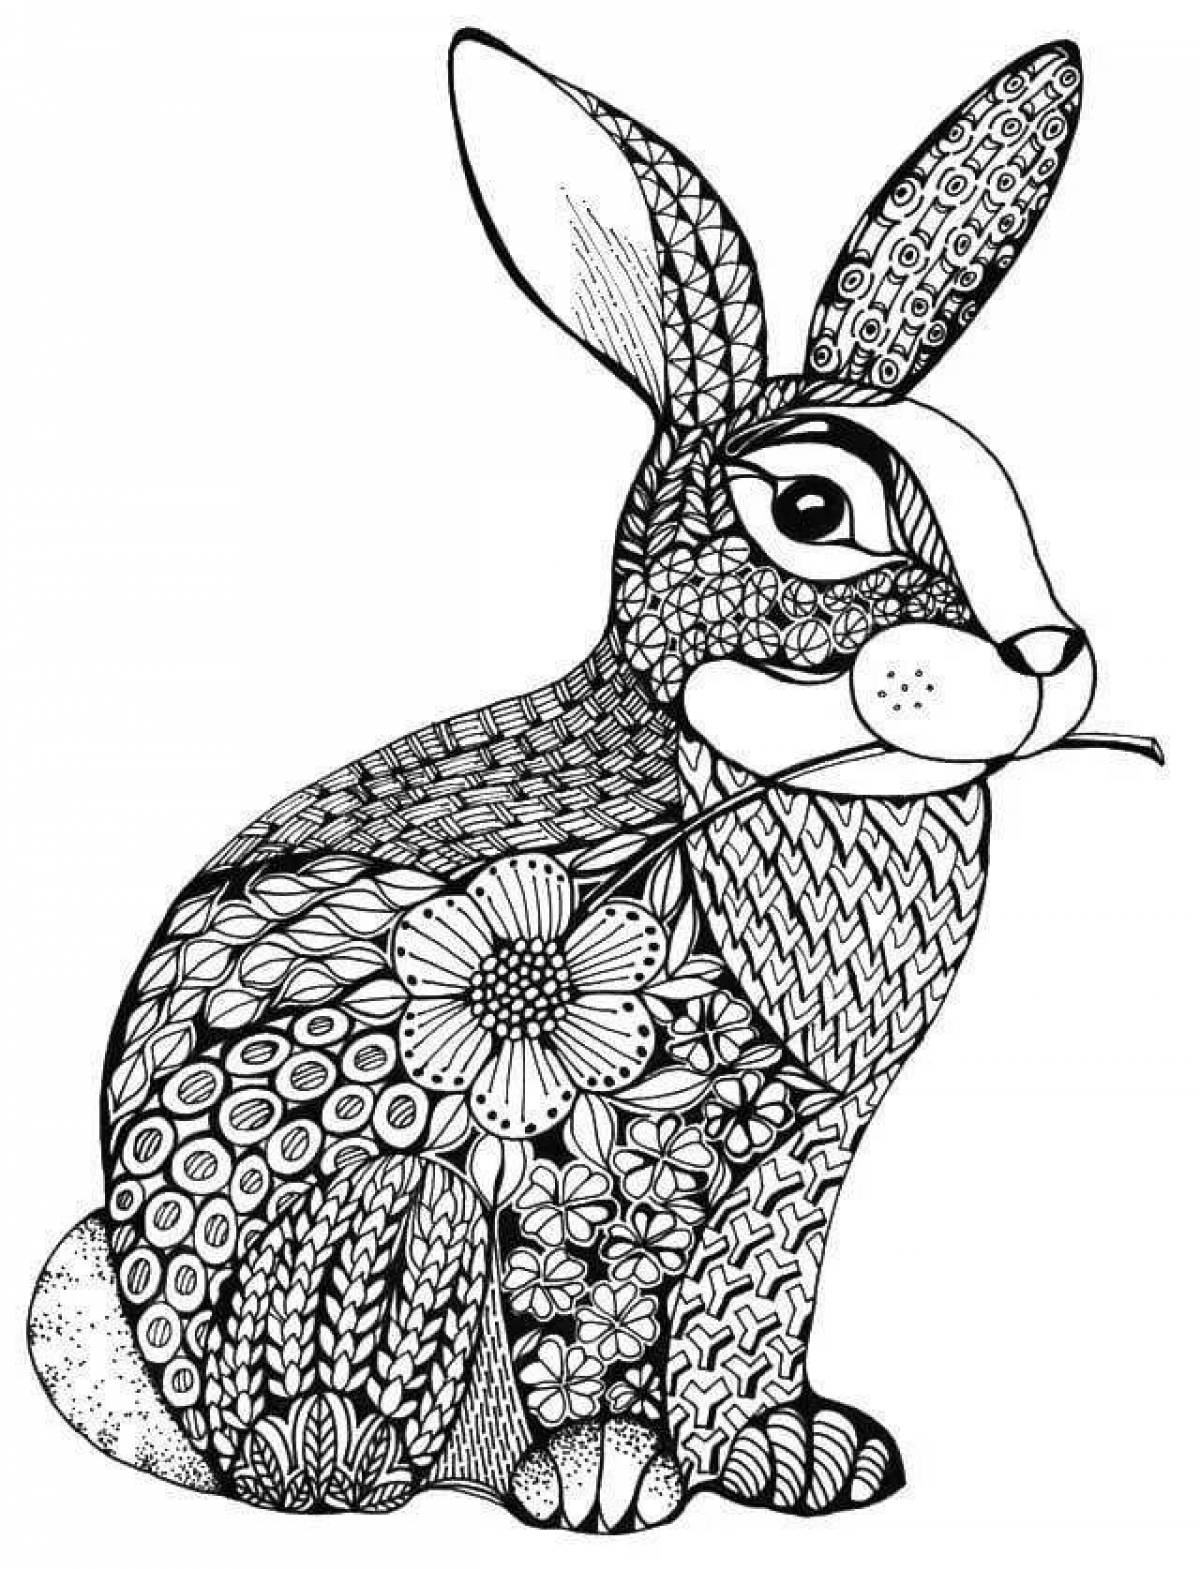 Attractive anti-stress hare coloring